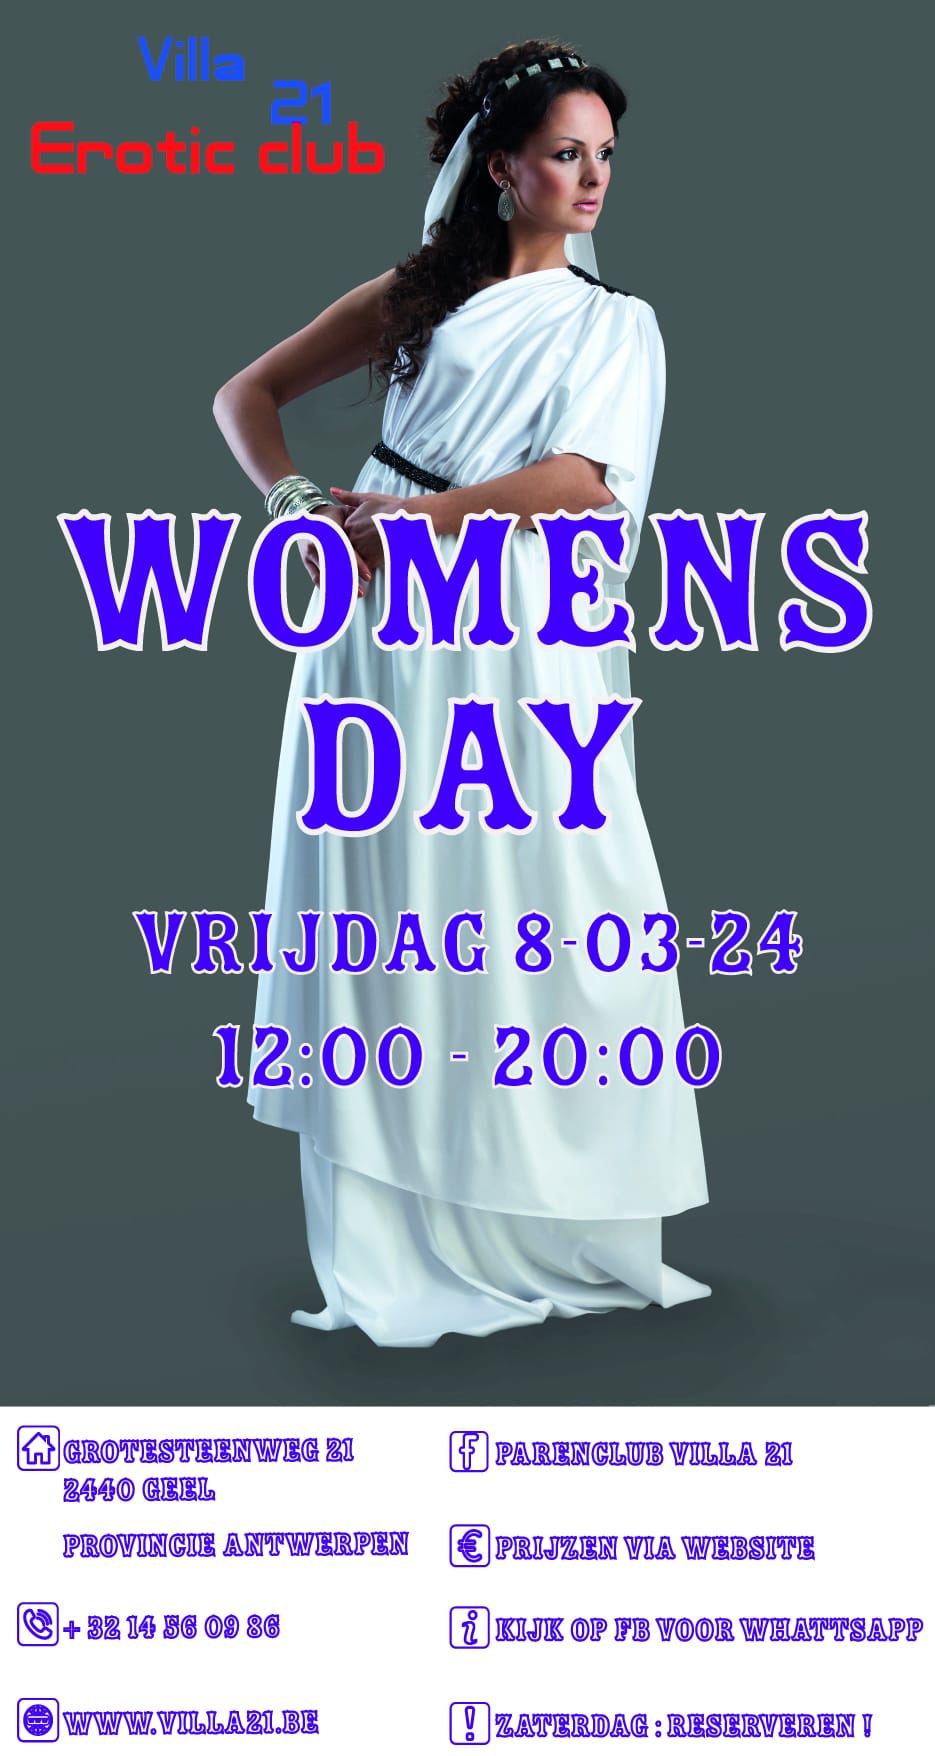 VRIJDAG: Women’s Day